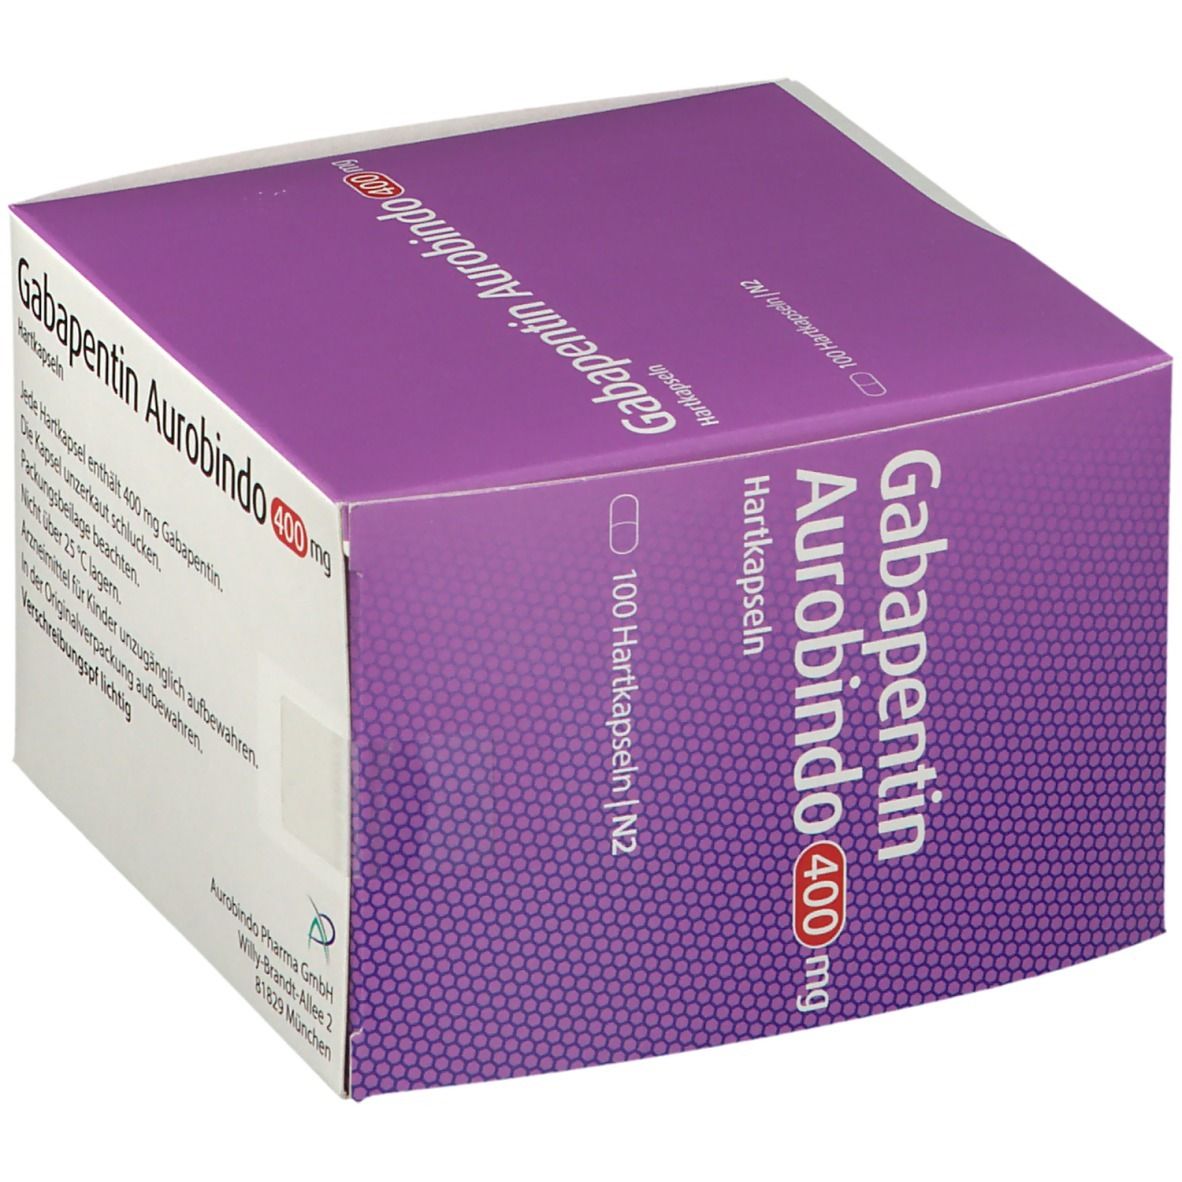 Gabapentin Aurobindo 400 mg